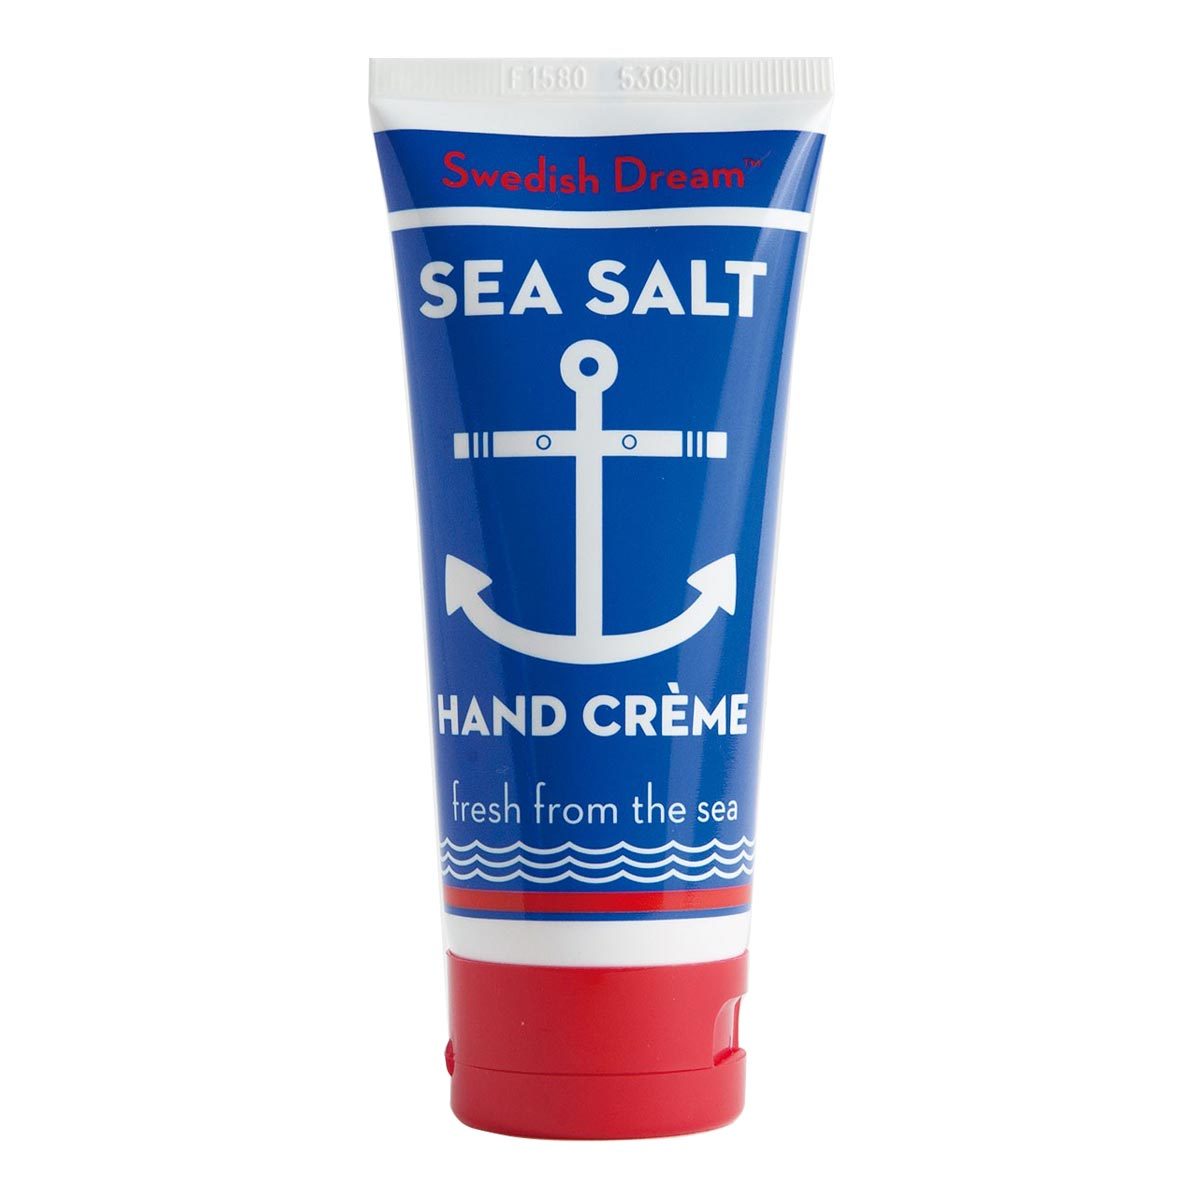 Primary image of Sea Salt Hand Creme